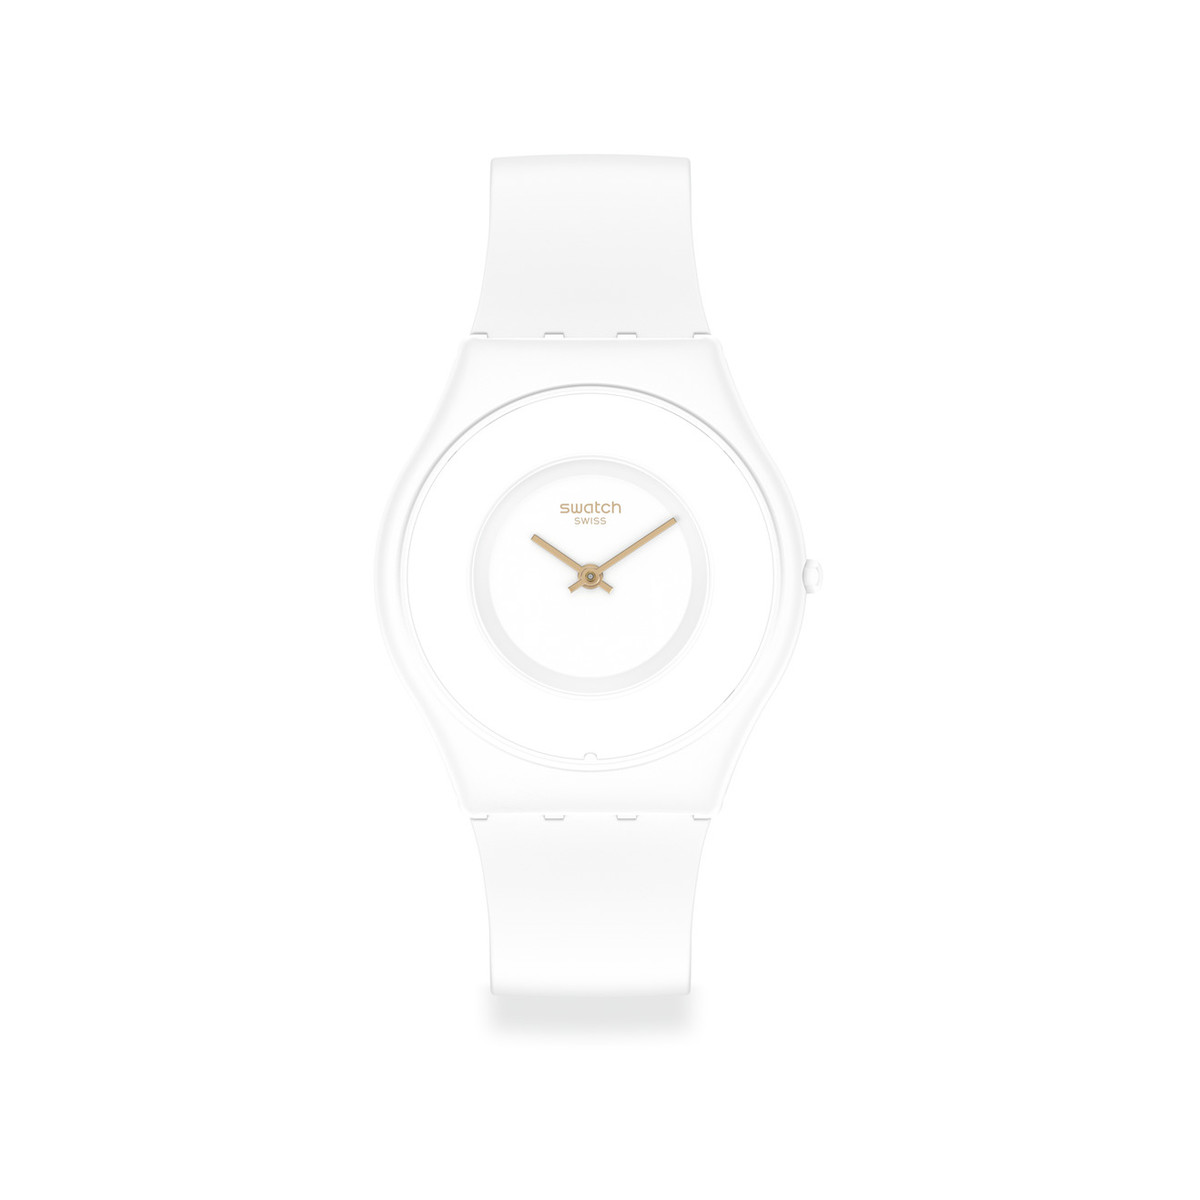 Montre Swatch mixte bioceramic bracelet silicone blanc